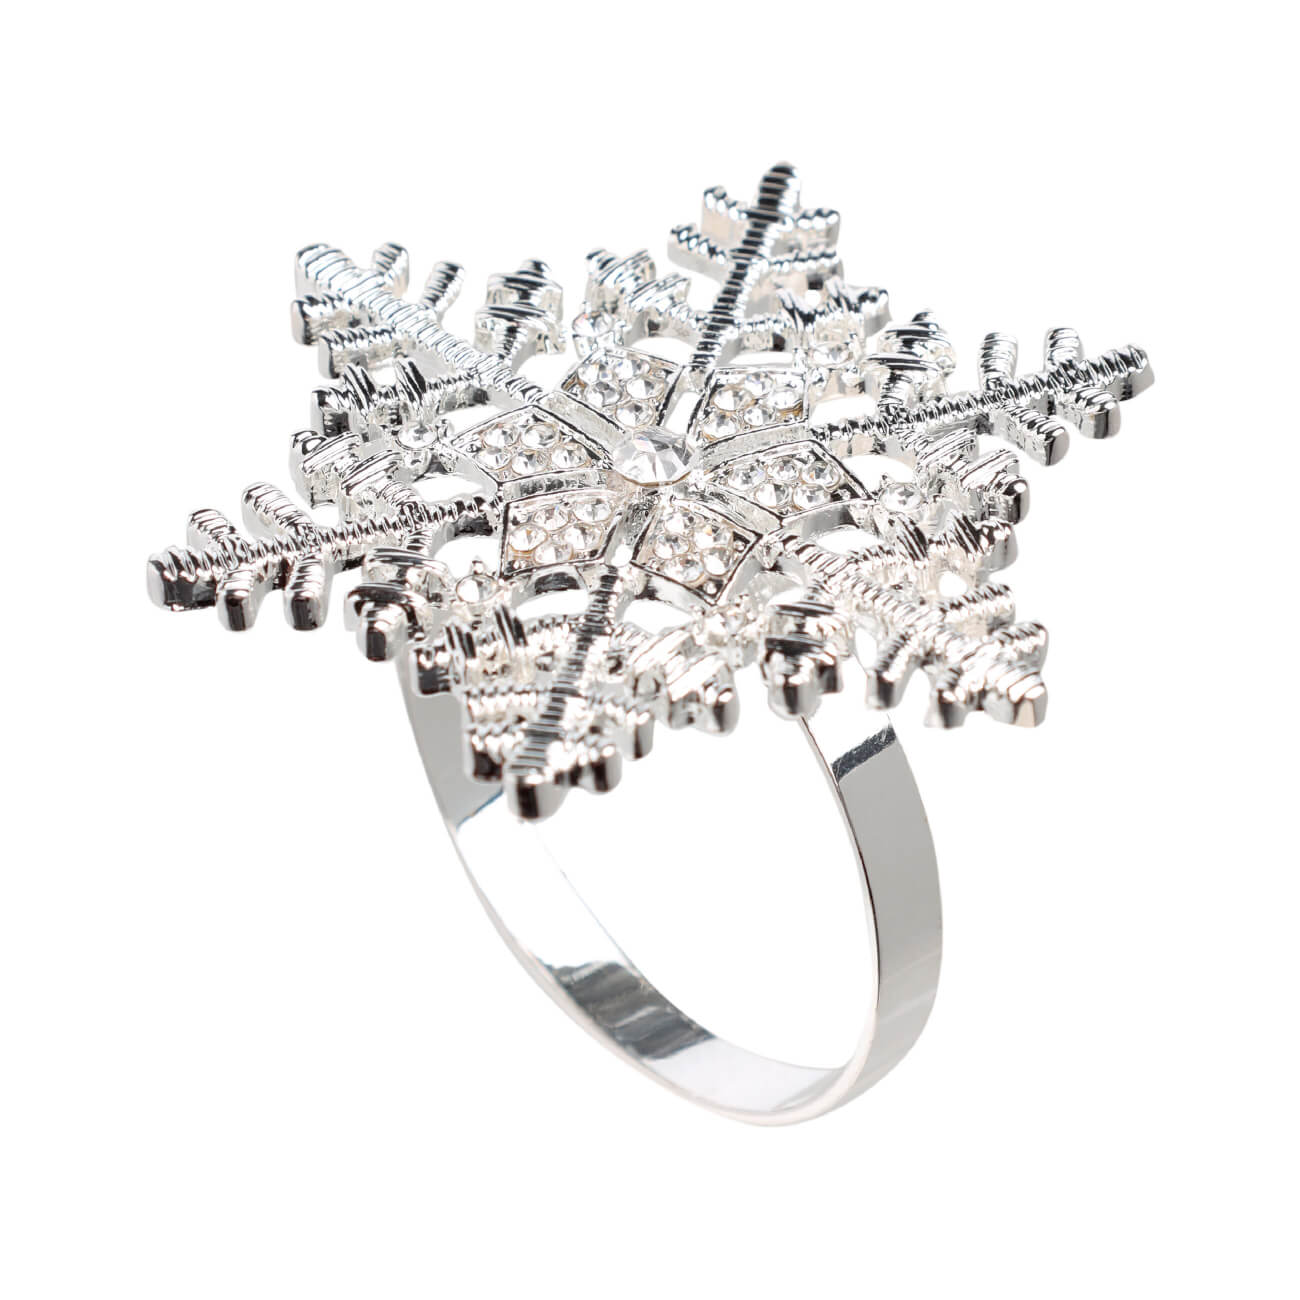 kuchenland кольцо для салфеток 5 см 2 шт металл серебристое перо feather Кольцо для салфеток, 5 см, металл, серебристое, Снежинка, Snowfall